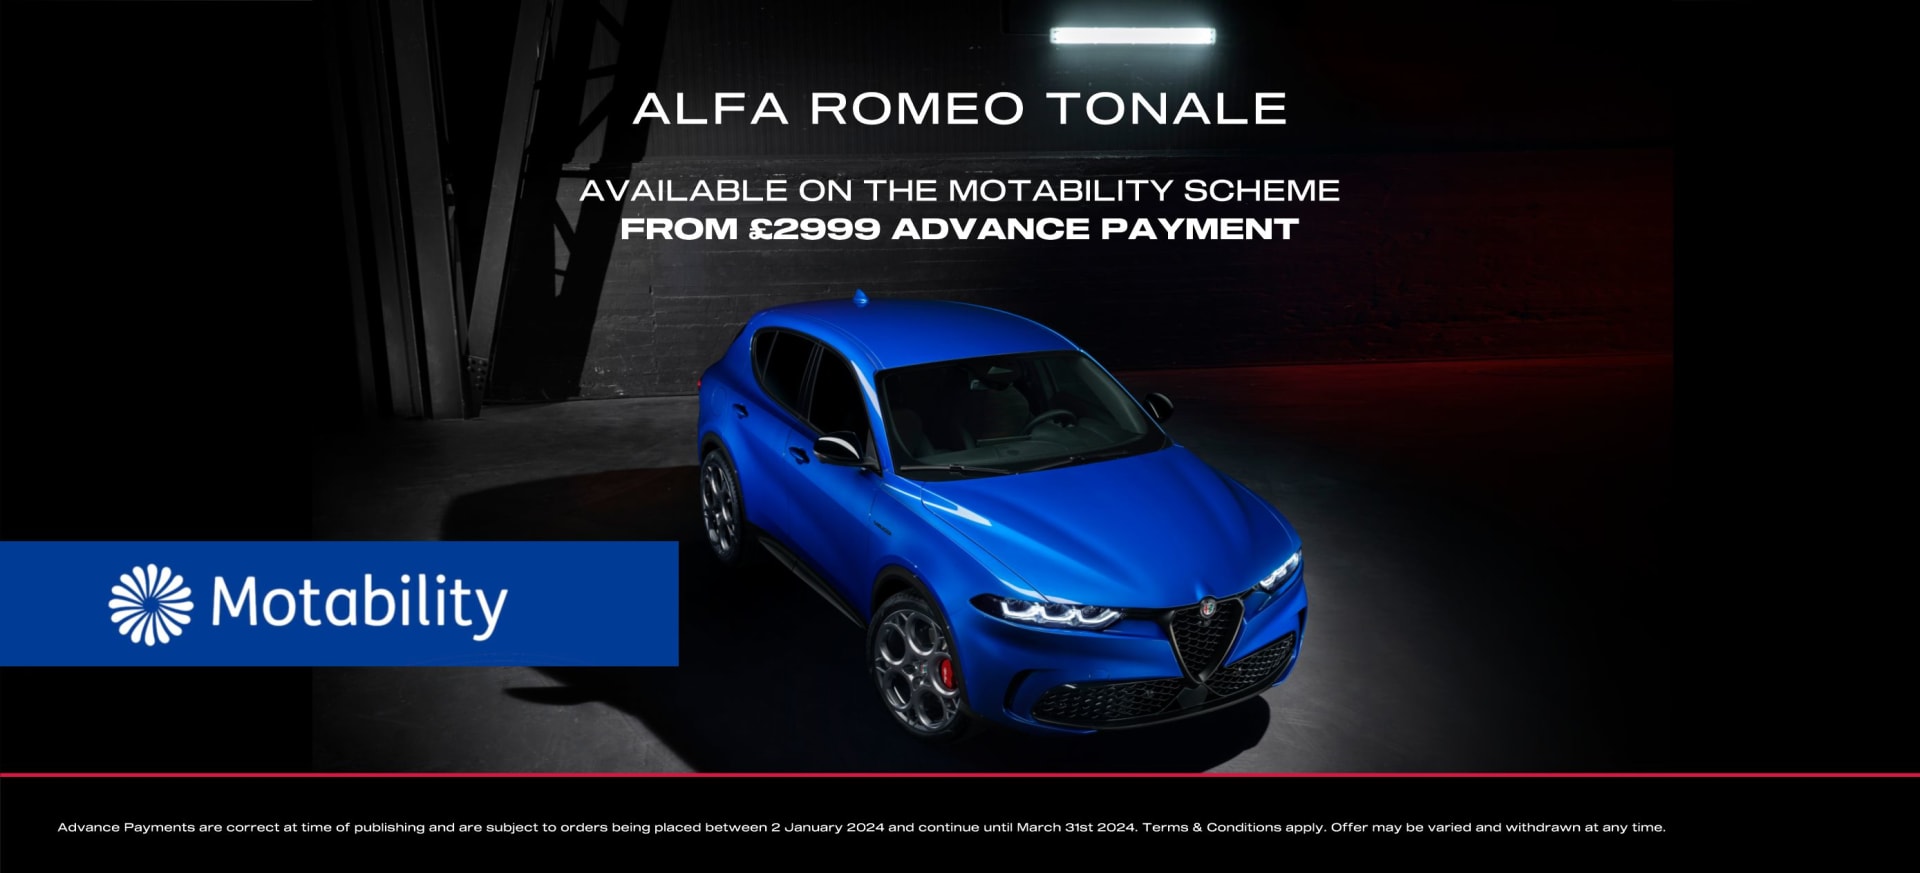 Alfa Romeo Motability